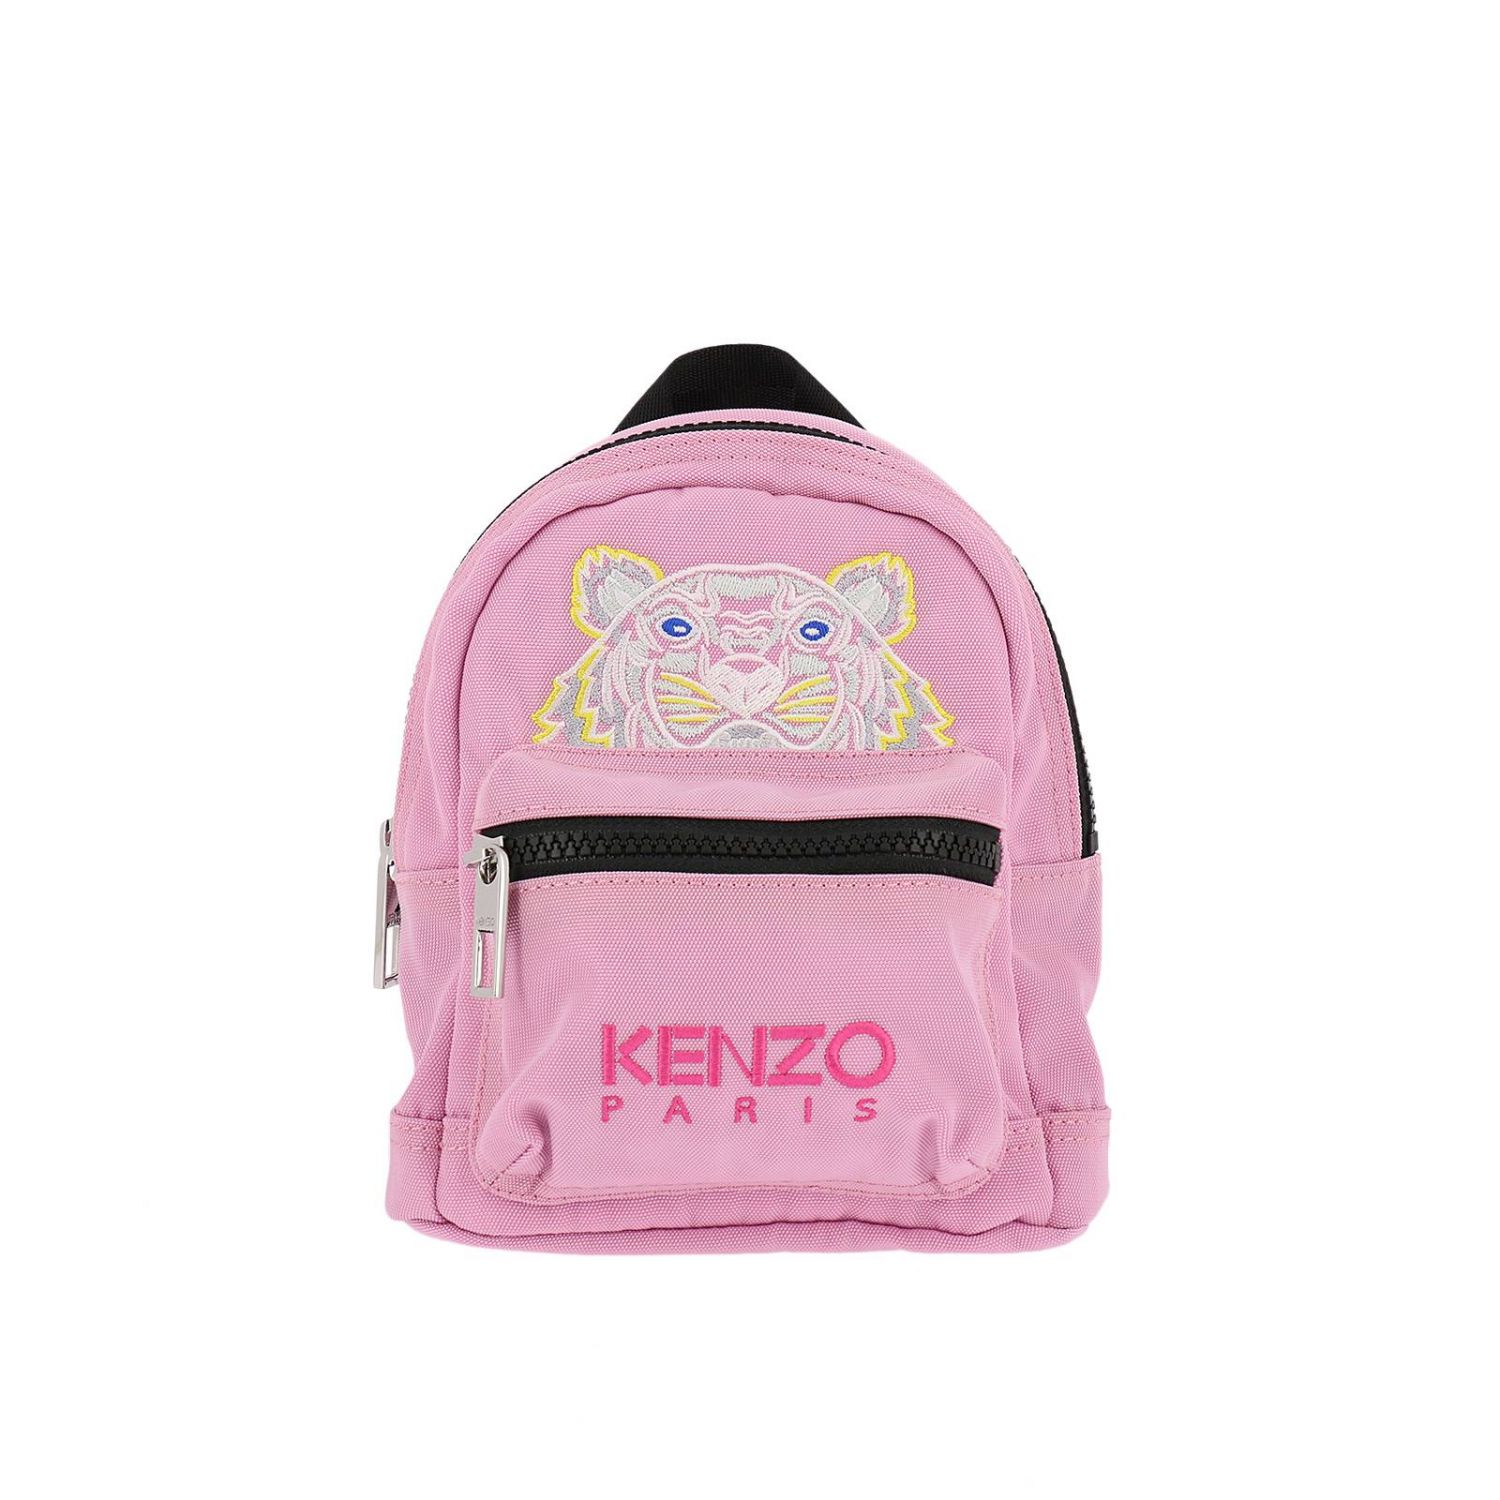 kenzo pink backpack